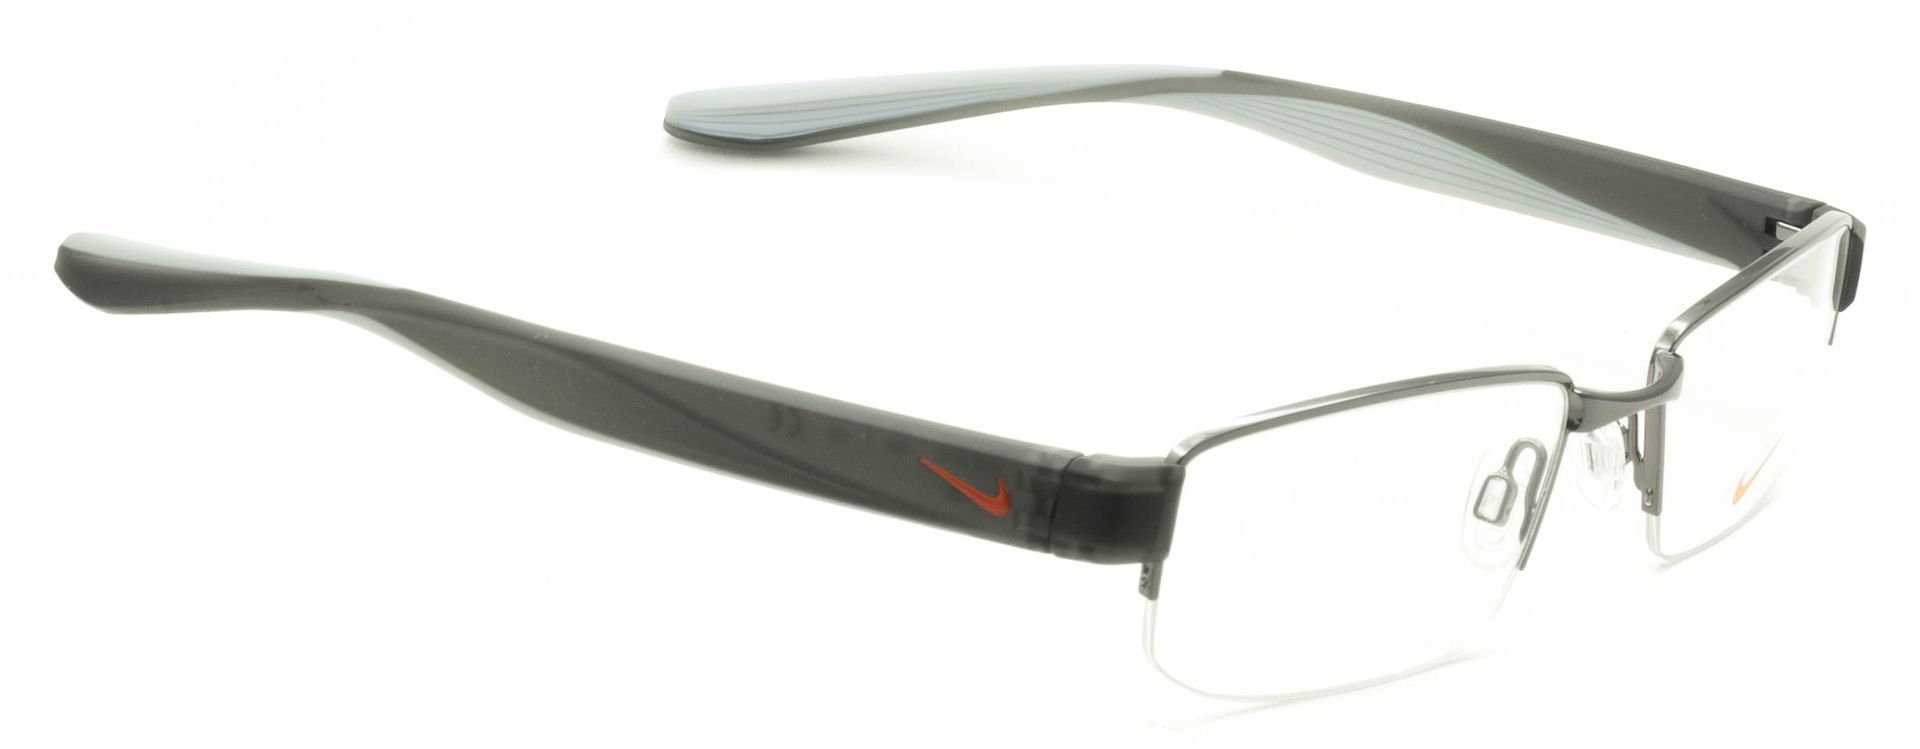 Humo como resultado Curiosidad NIKE 8170 068 52mm FRAMES RX Optical Glasses Eyeglasses Eyewear New -  TRUSTED - GGV Eyewear